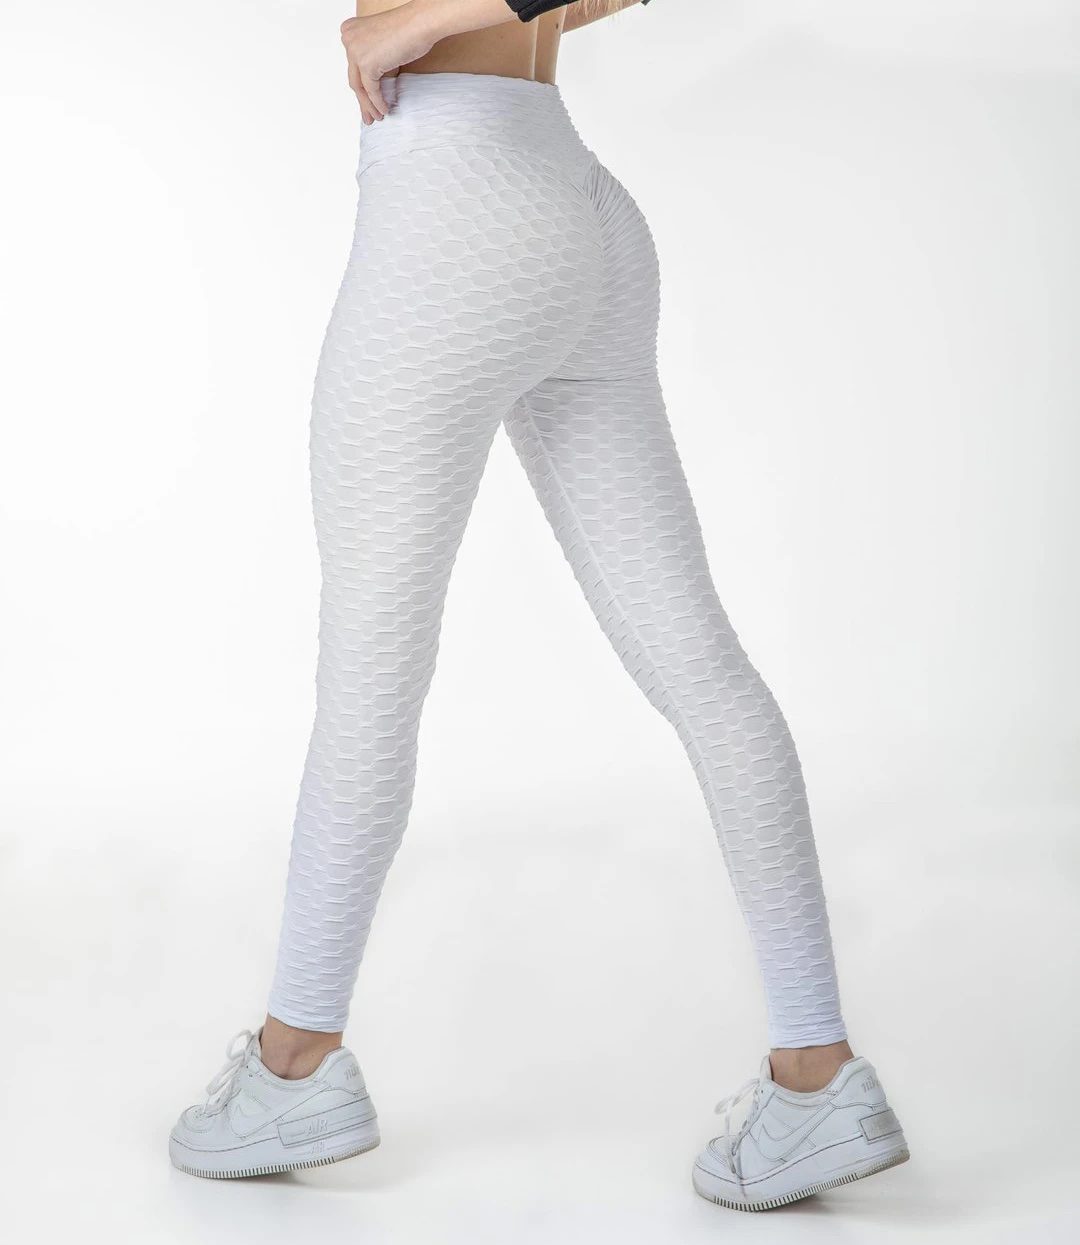 https://www.beyondhealthy.ca/wp-content/uploads/2020/08/white-anti-cellulite-leggings.jpg